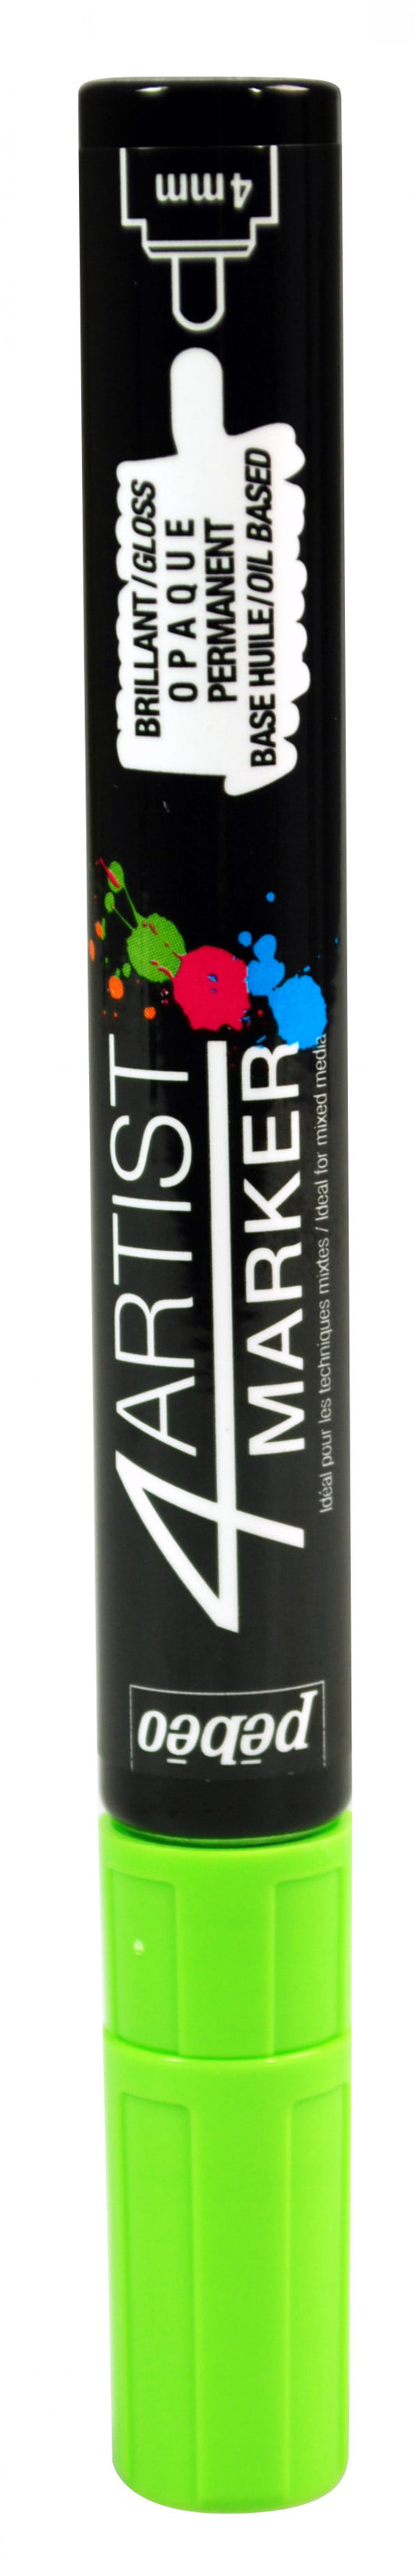 4Artist marker pen, 4mm tip, light green